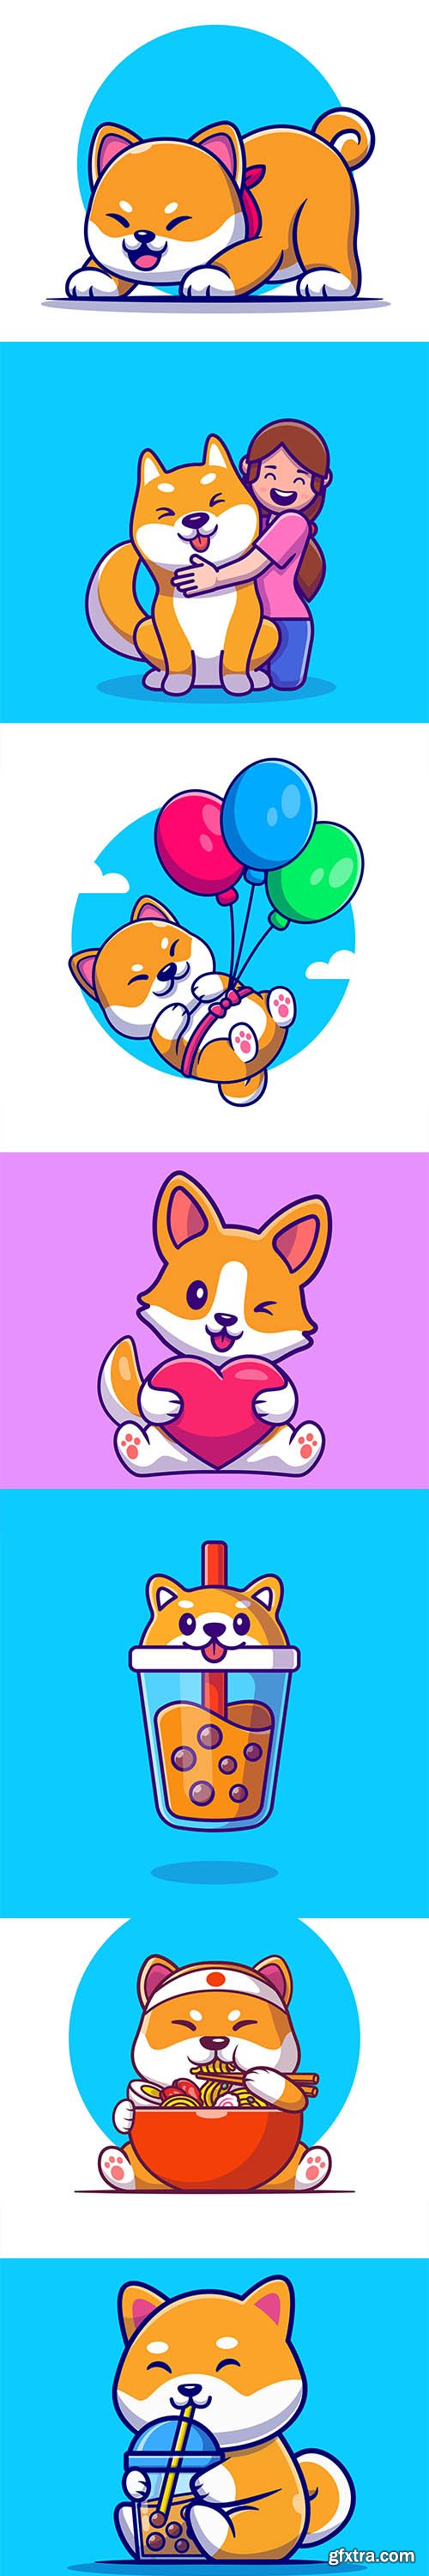 Cute shiba inu dog cartoon illustration set vol 2